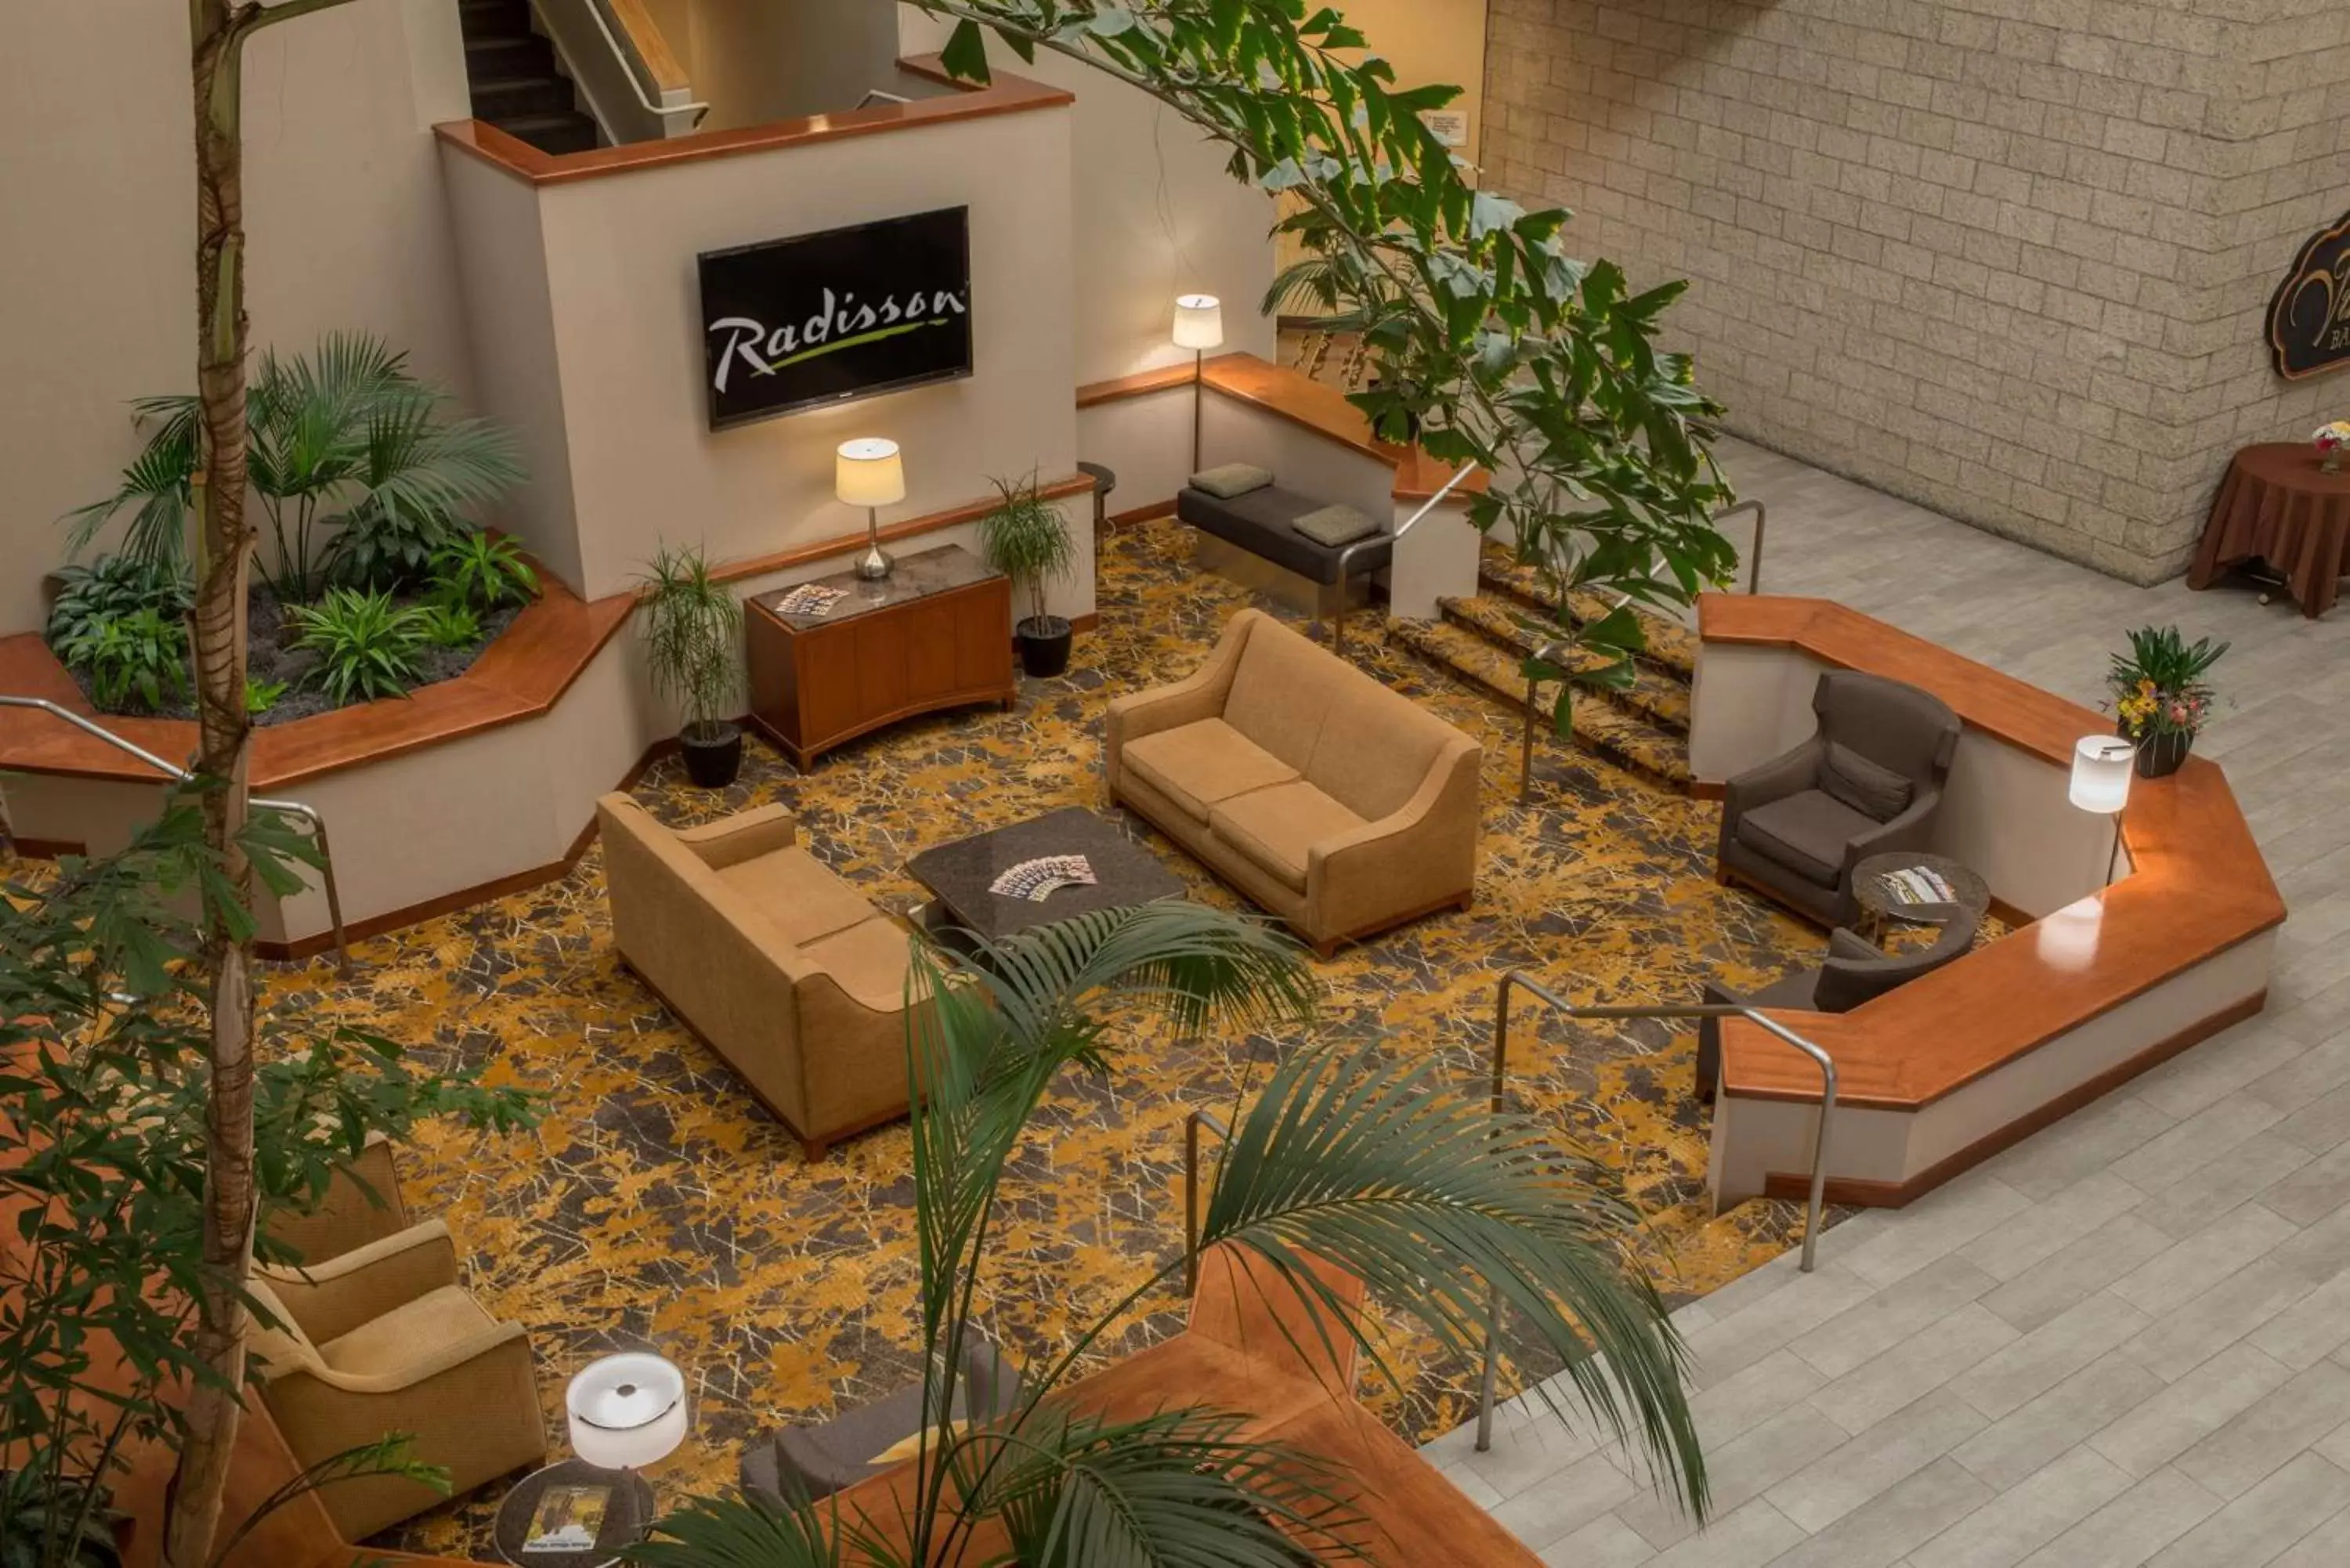 Lobby or reception in Radisson Hotel Santa Maria